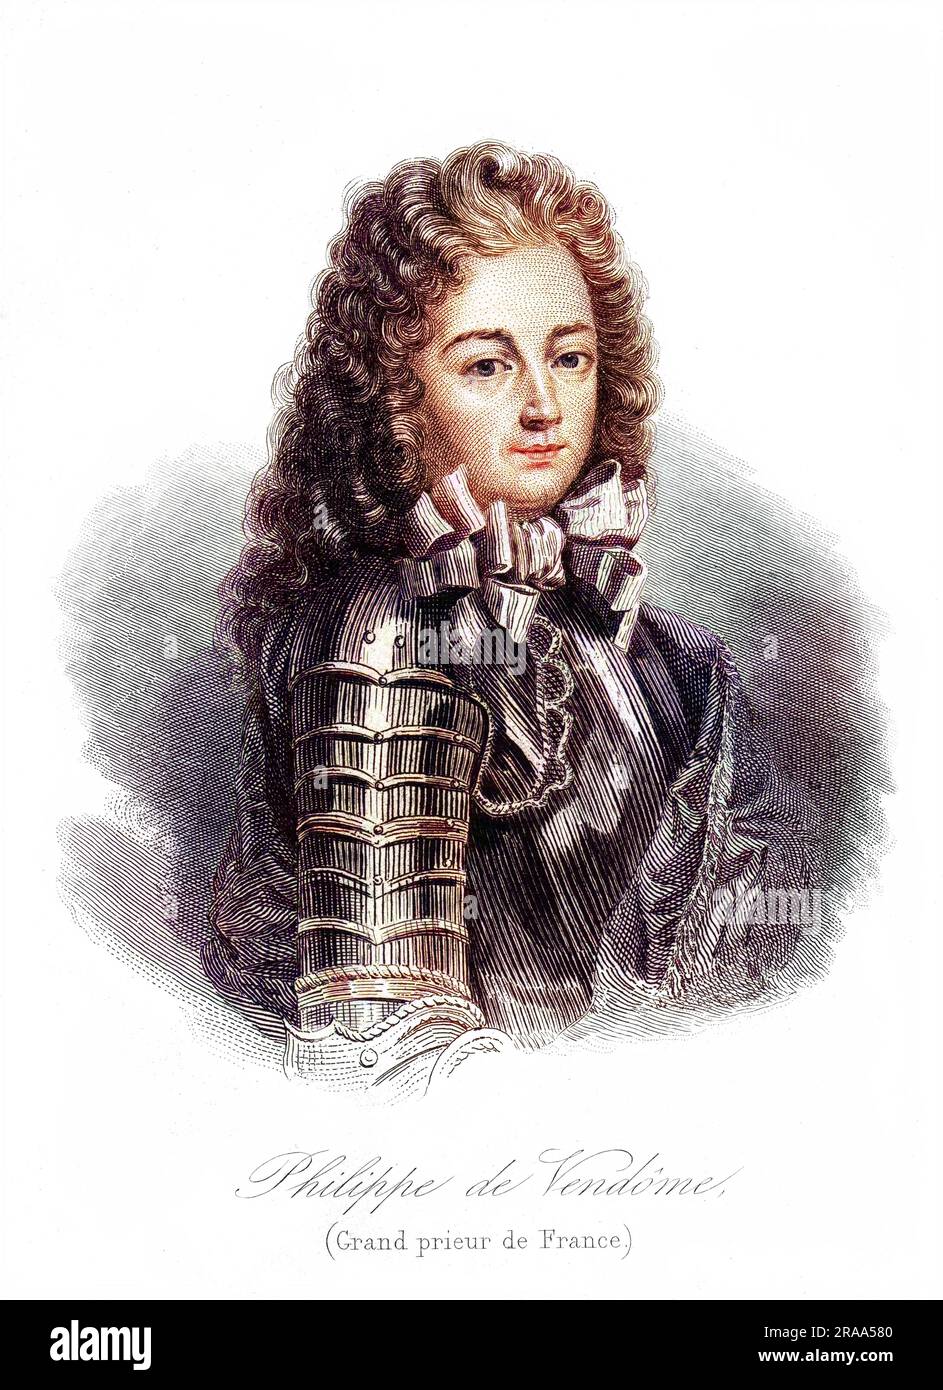 PHILIPPE DE VENDOME, französischer Soldat und Staatsmann, Grand Prieur de France. Datum: 1655 - 1727 Stockfoto